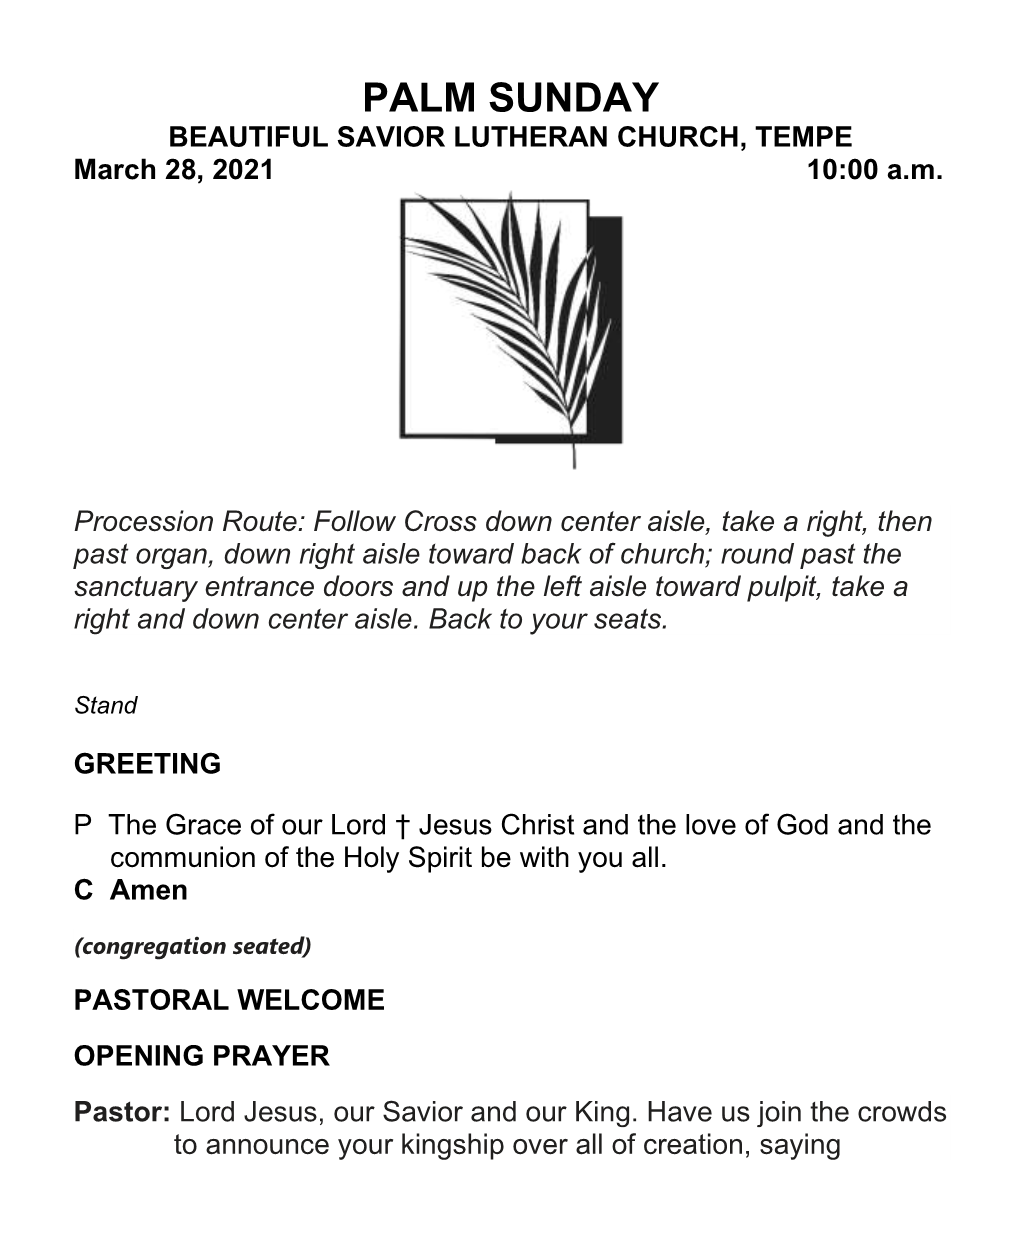 PALM SUNDAY BEAUTIFUL SAVIOR LUTHERAN CHURCH, TEMPE March 28, 2021 10:00 A.M